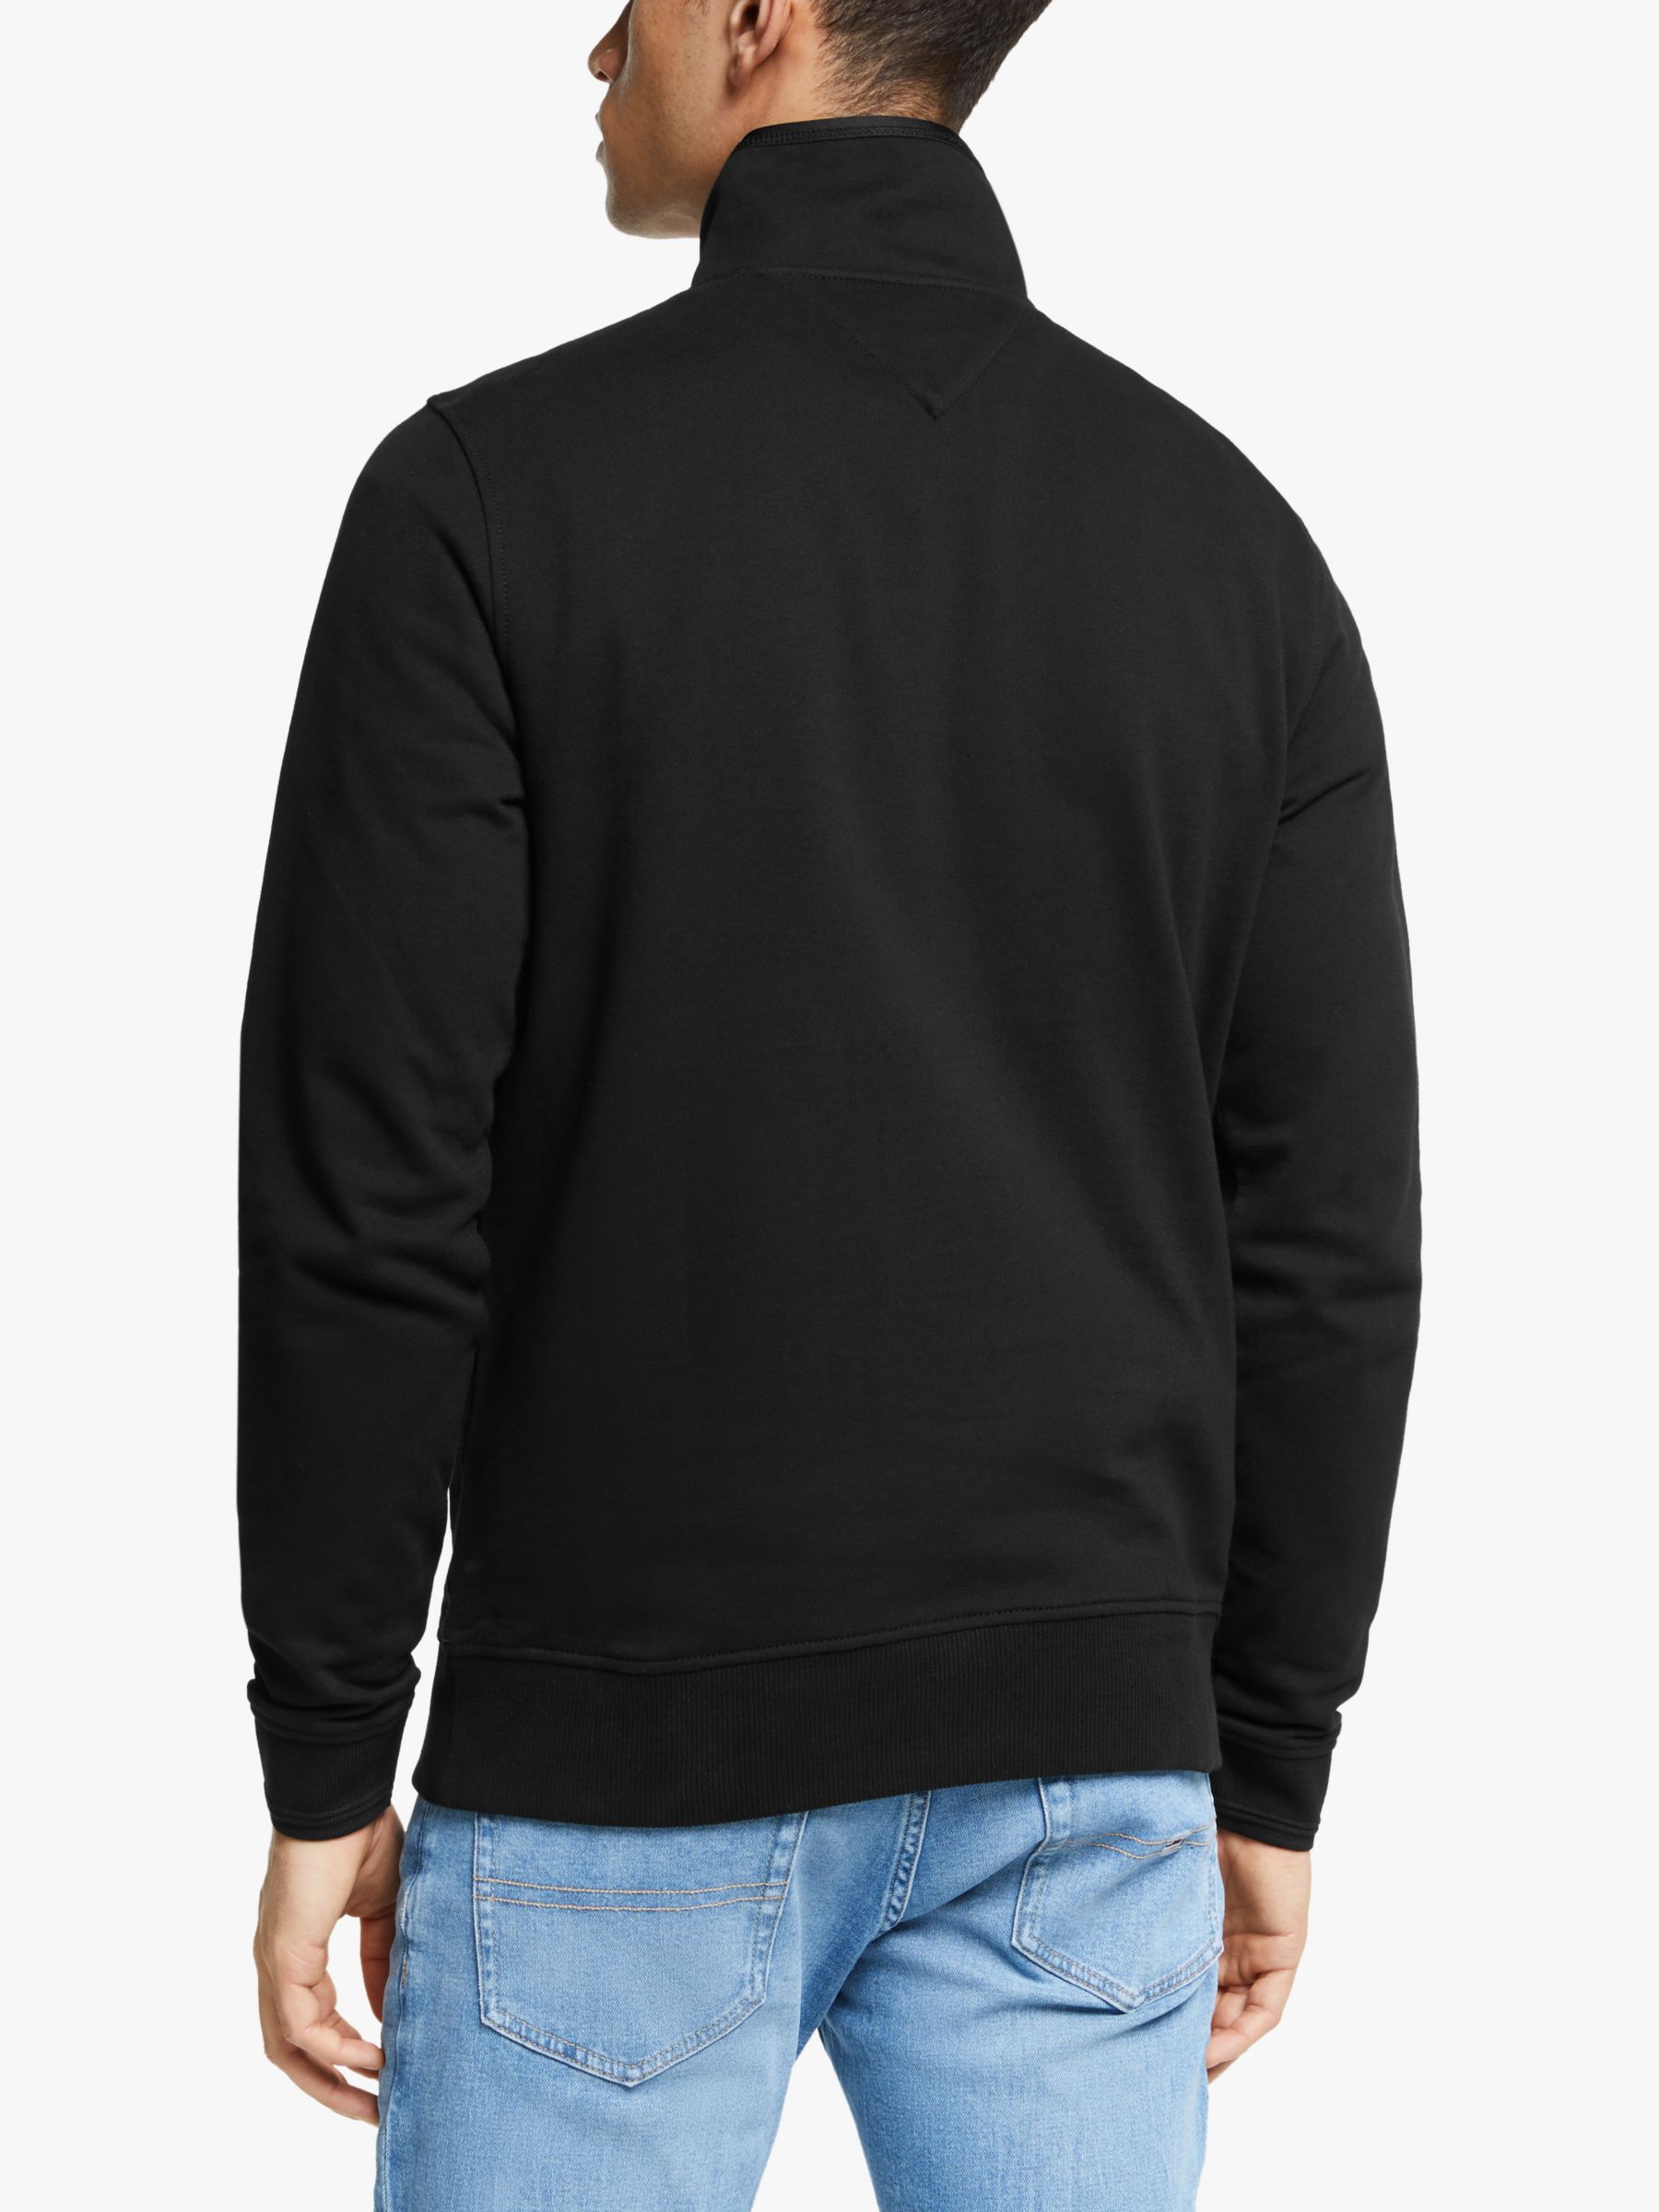 Tommy Hilfiger TH Flex Half Zip Sweatshirt, Black at John Lewis & Partners